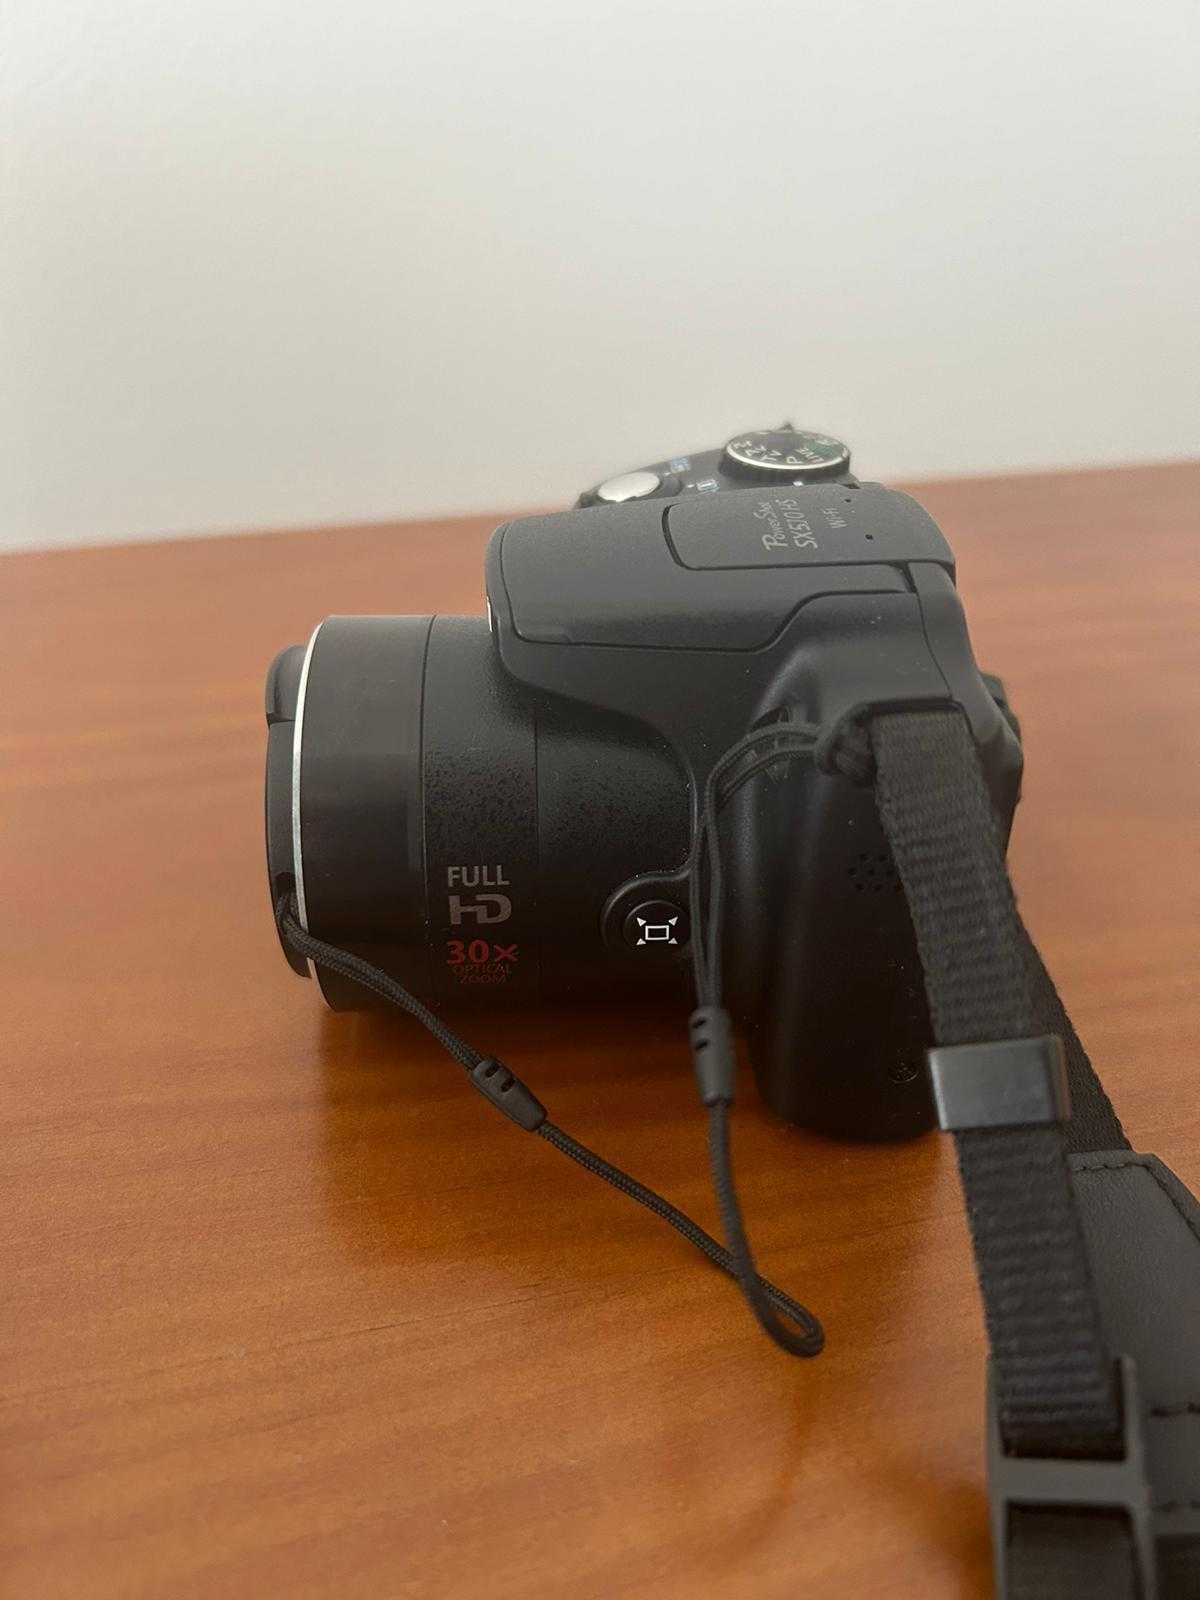 Camera Canon PowerShot SX510 HS